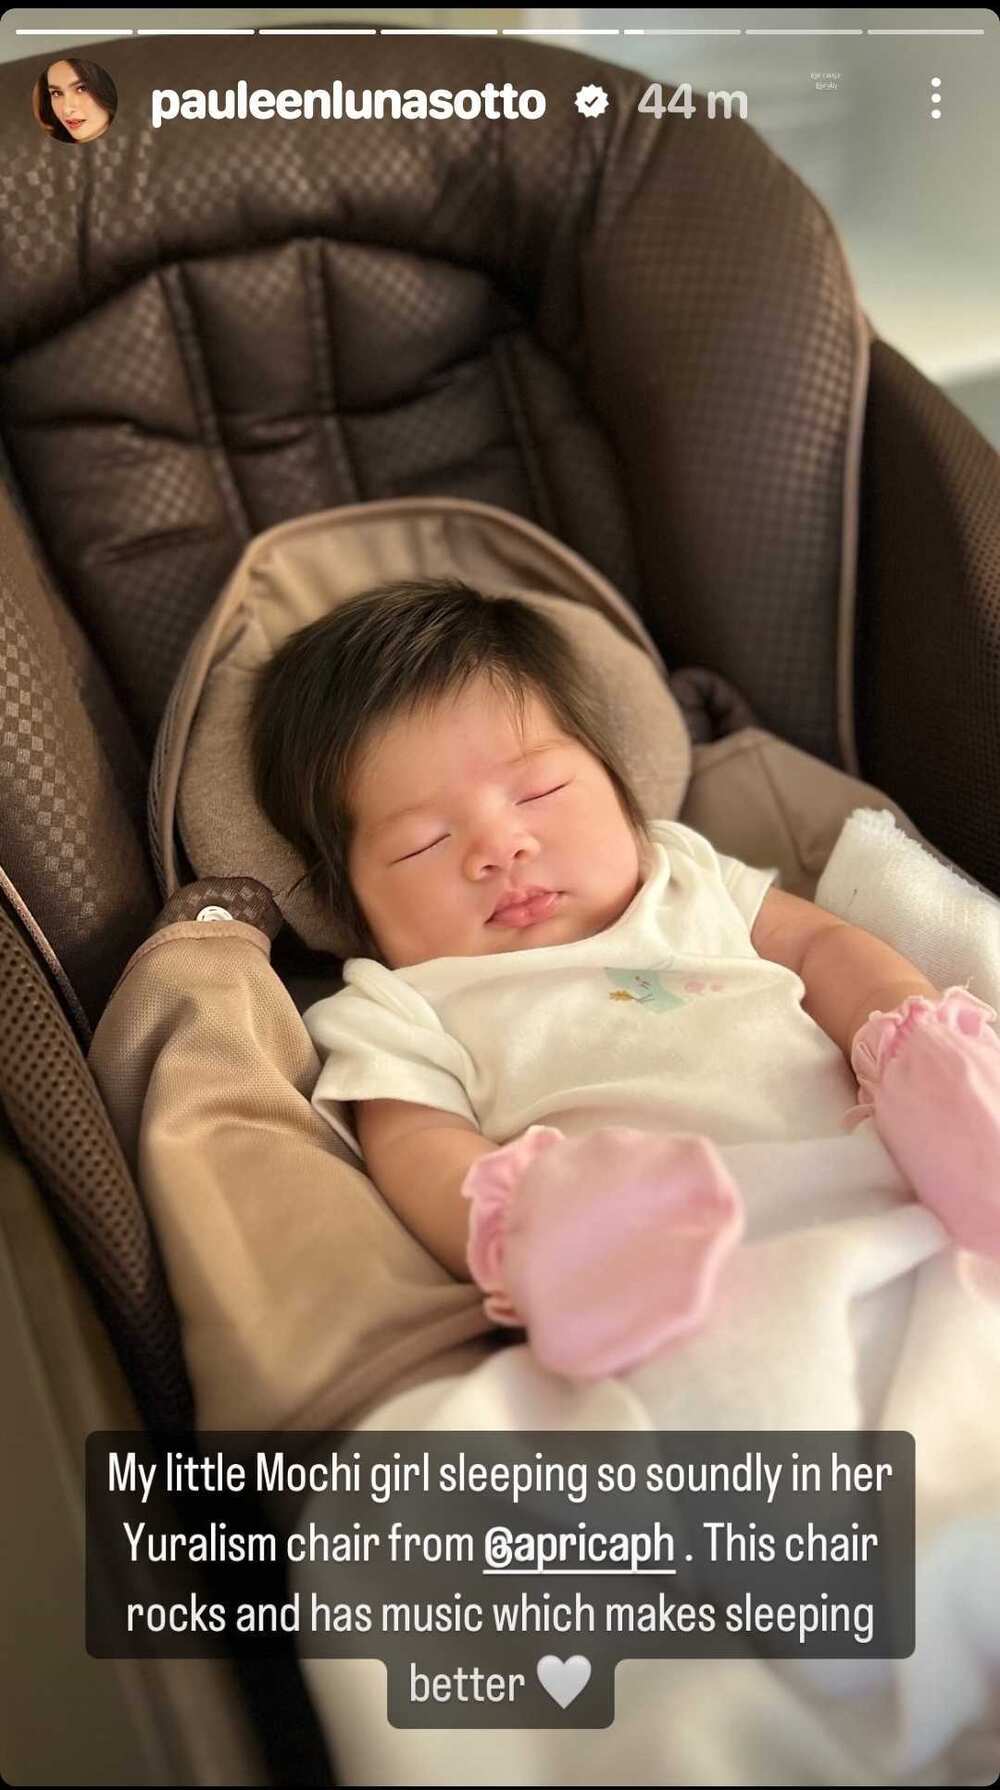 Pauleen Luna shares adorable photos of Baby Mochi sleeping soundly